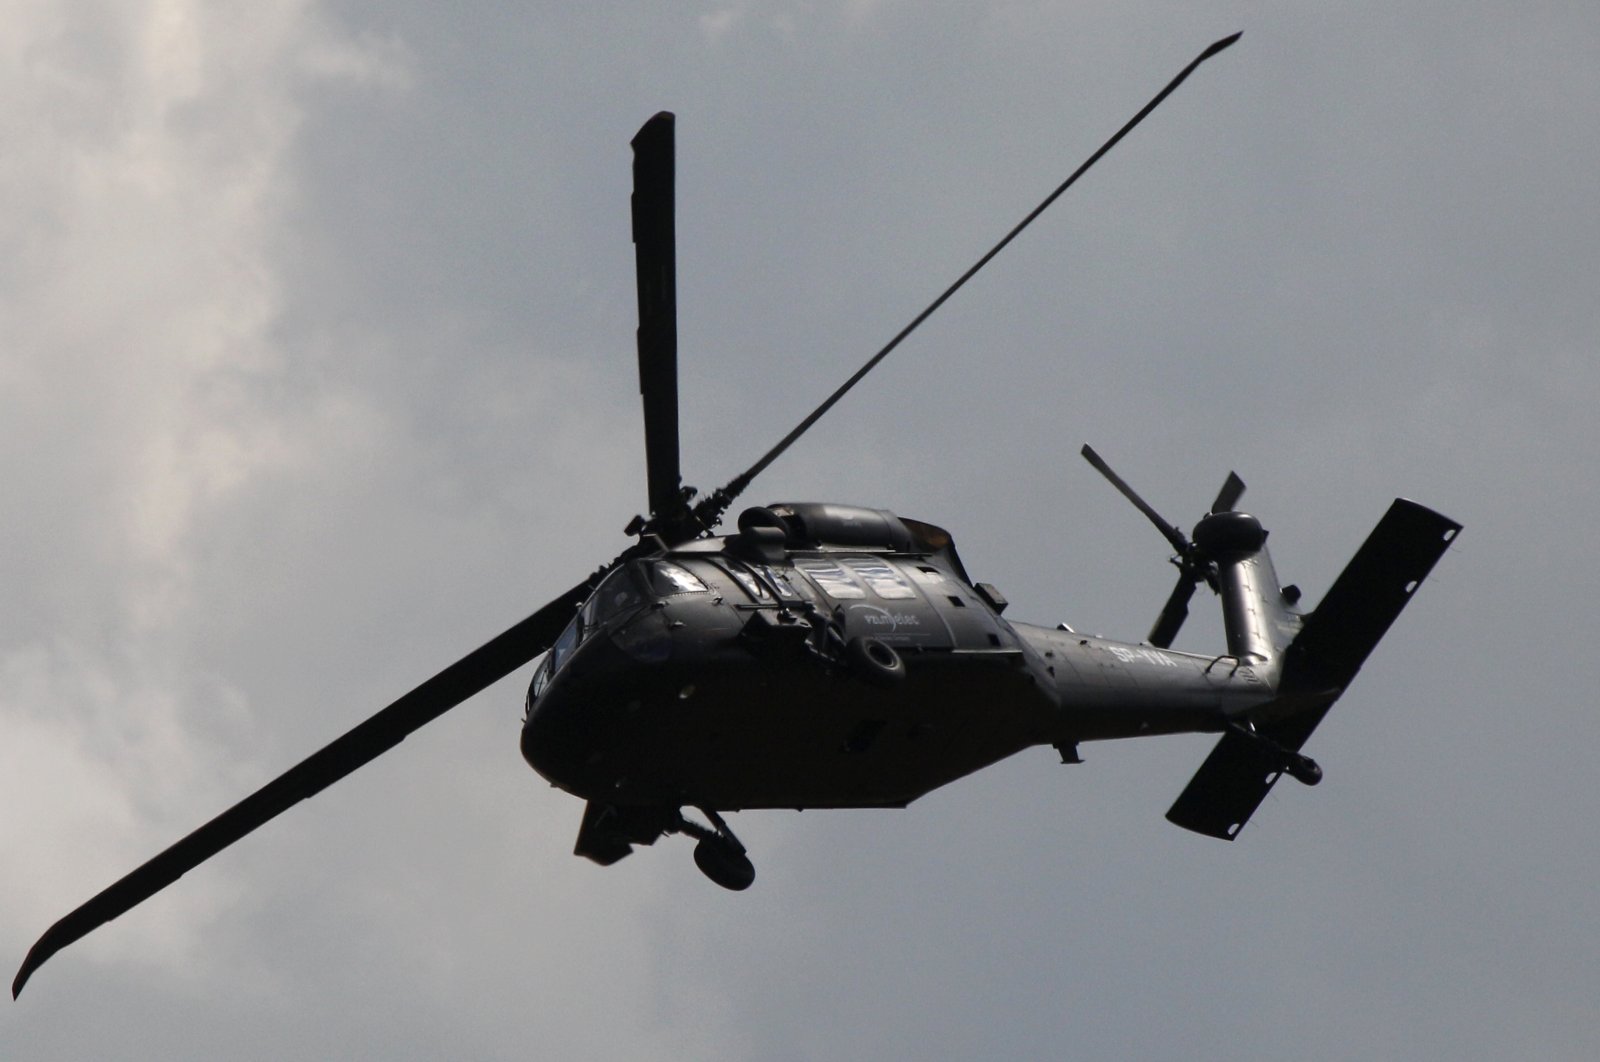 A PZL Mielec S-70i Black Hawk helicopter flies at the Radom Air Show at an airport in Radom, Poland, Aug. 24, 2013. (Reuters Photo)